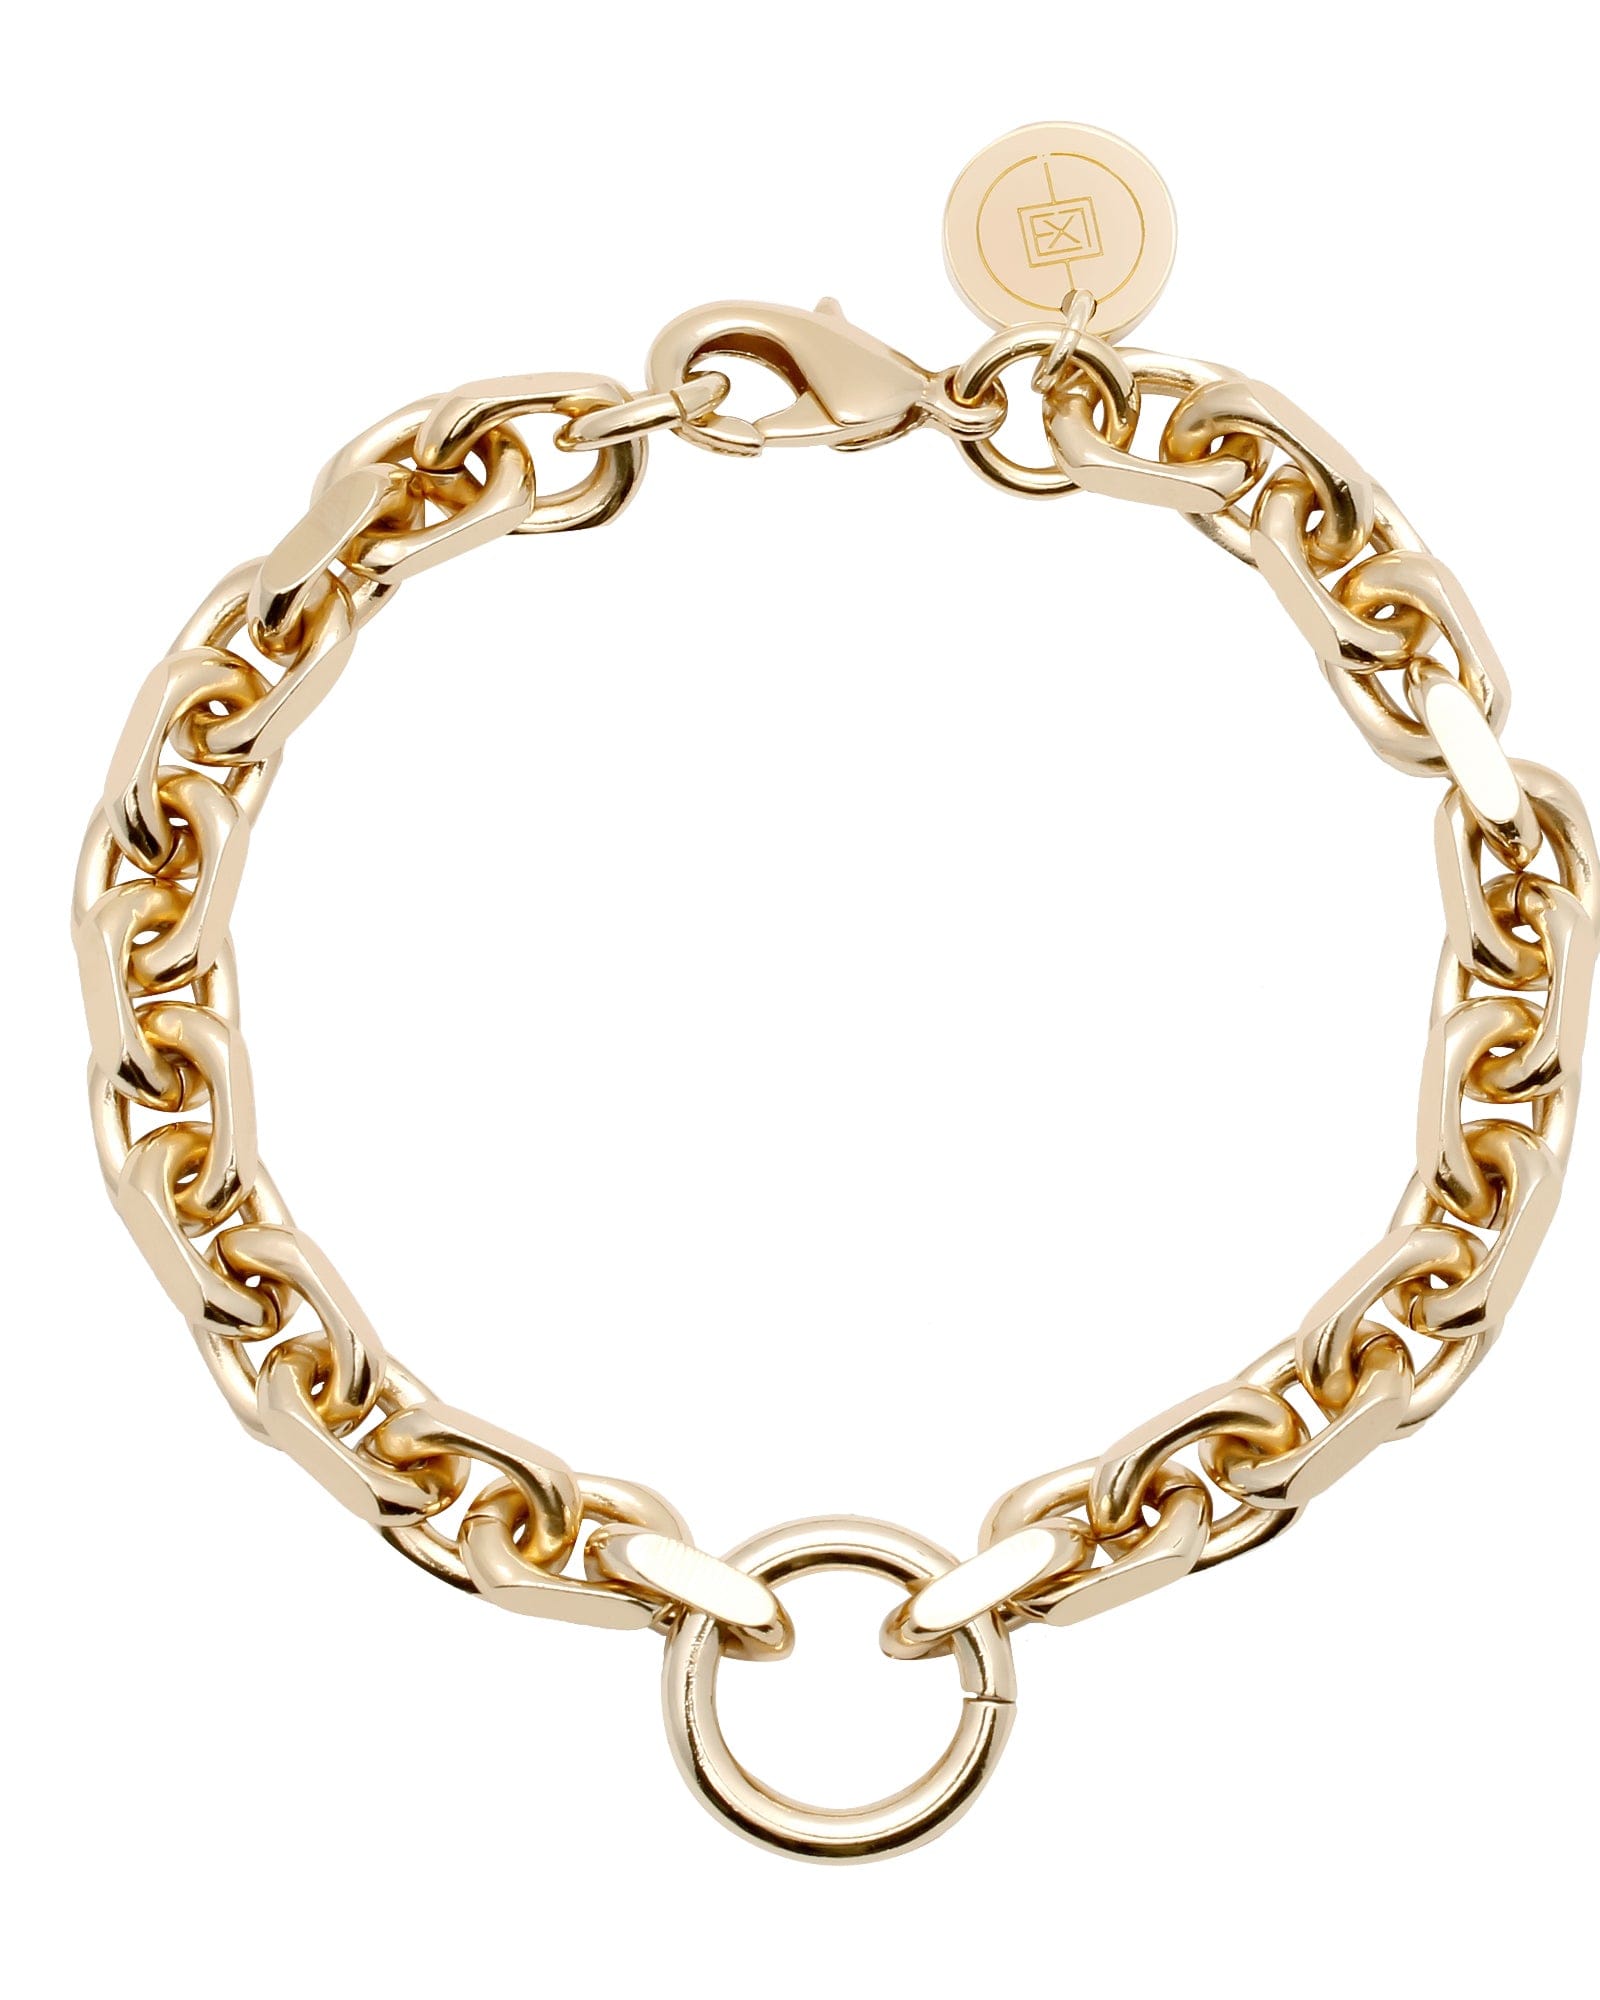 Buy Gold Bracelet Design For Women And Girls Online – Gehna Shop